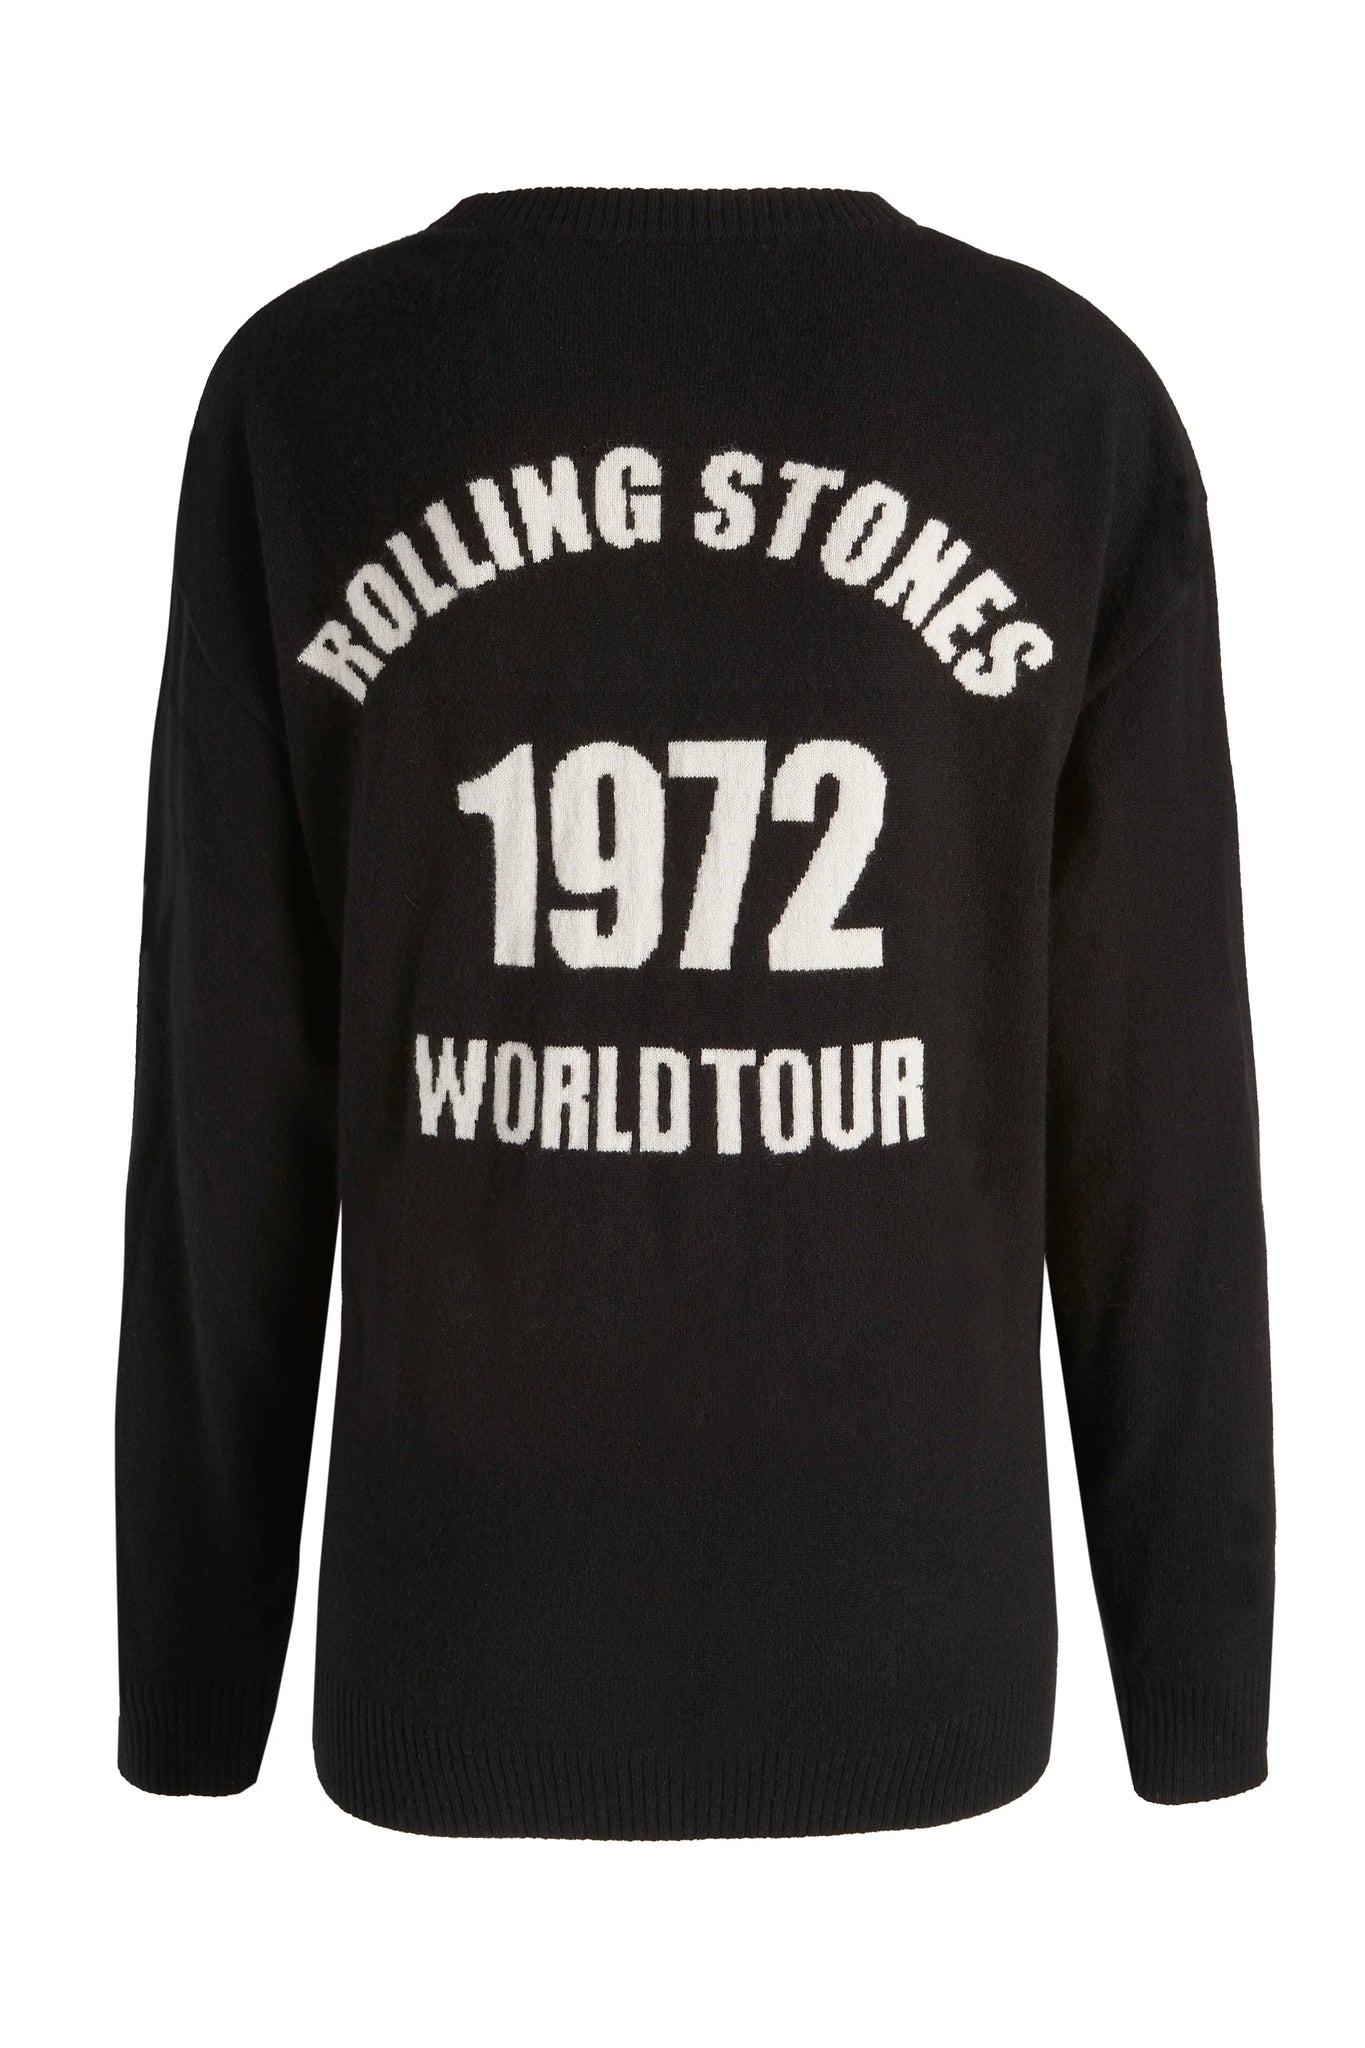 ROLLING STONES 1972 WORLD TOUR BLACK SWEATER